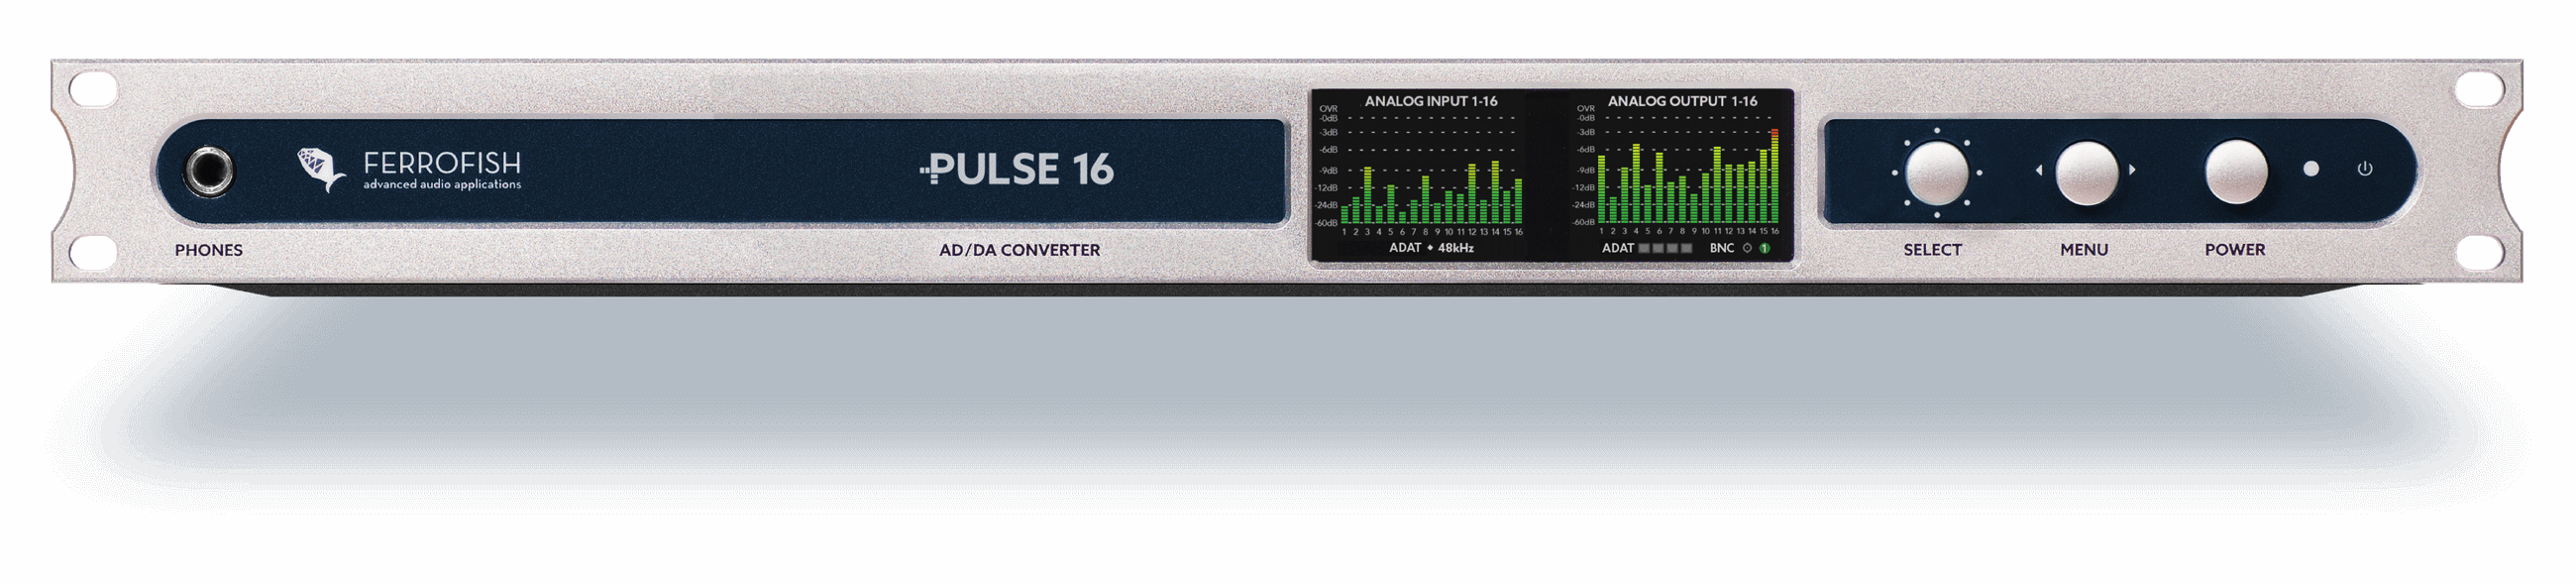 Ferrofish Pulse 16 +24dBu - Same as Pulse 16, with analog I/O modified for +24dBu level compatibility